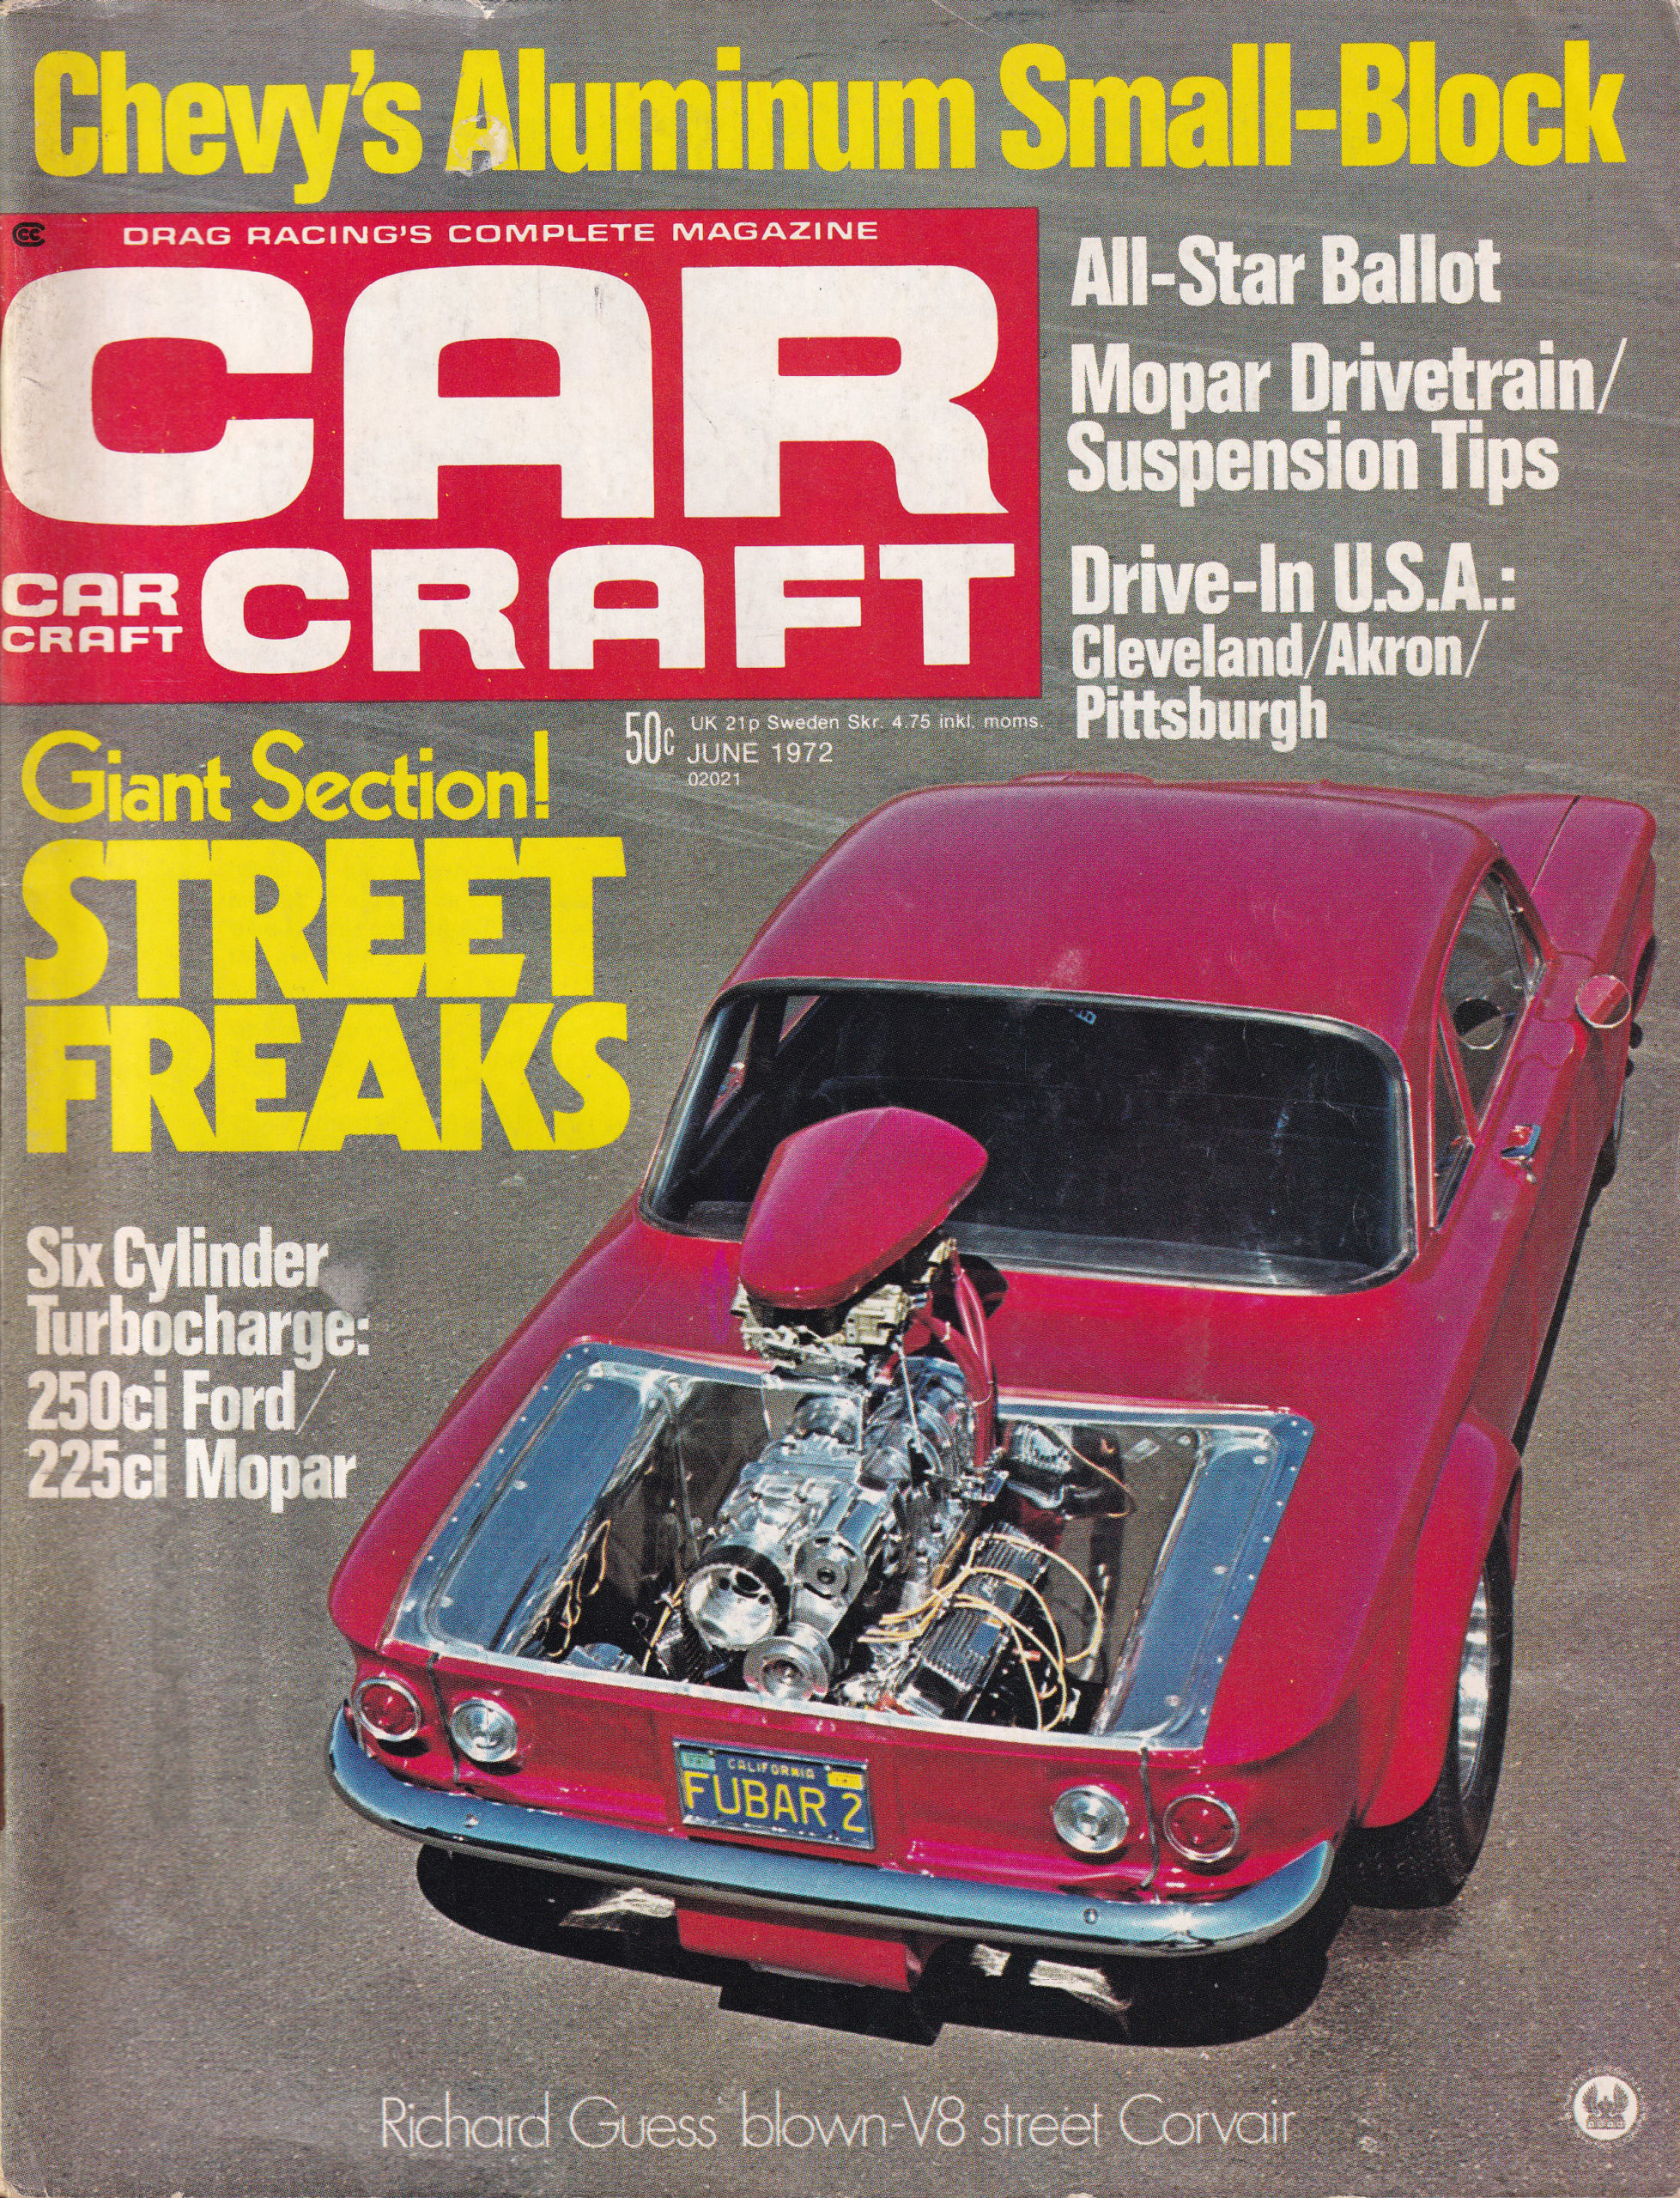 Car Craft, June 1972 cover.